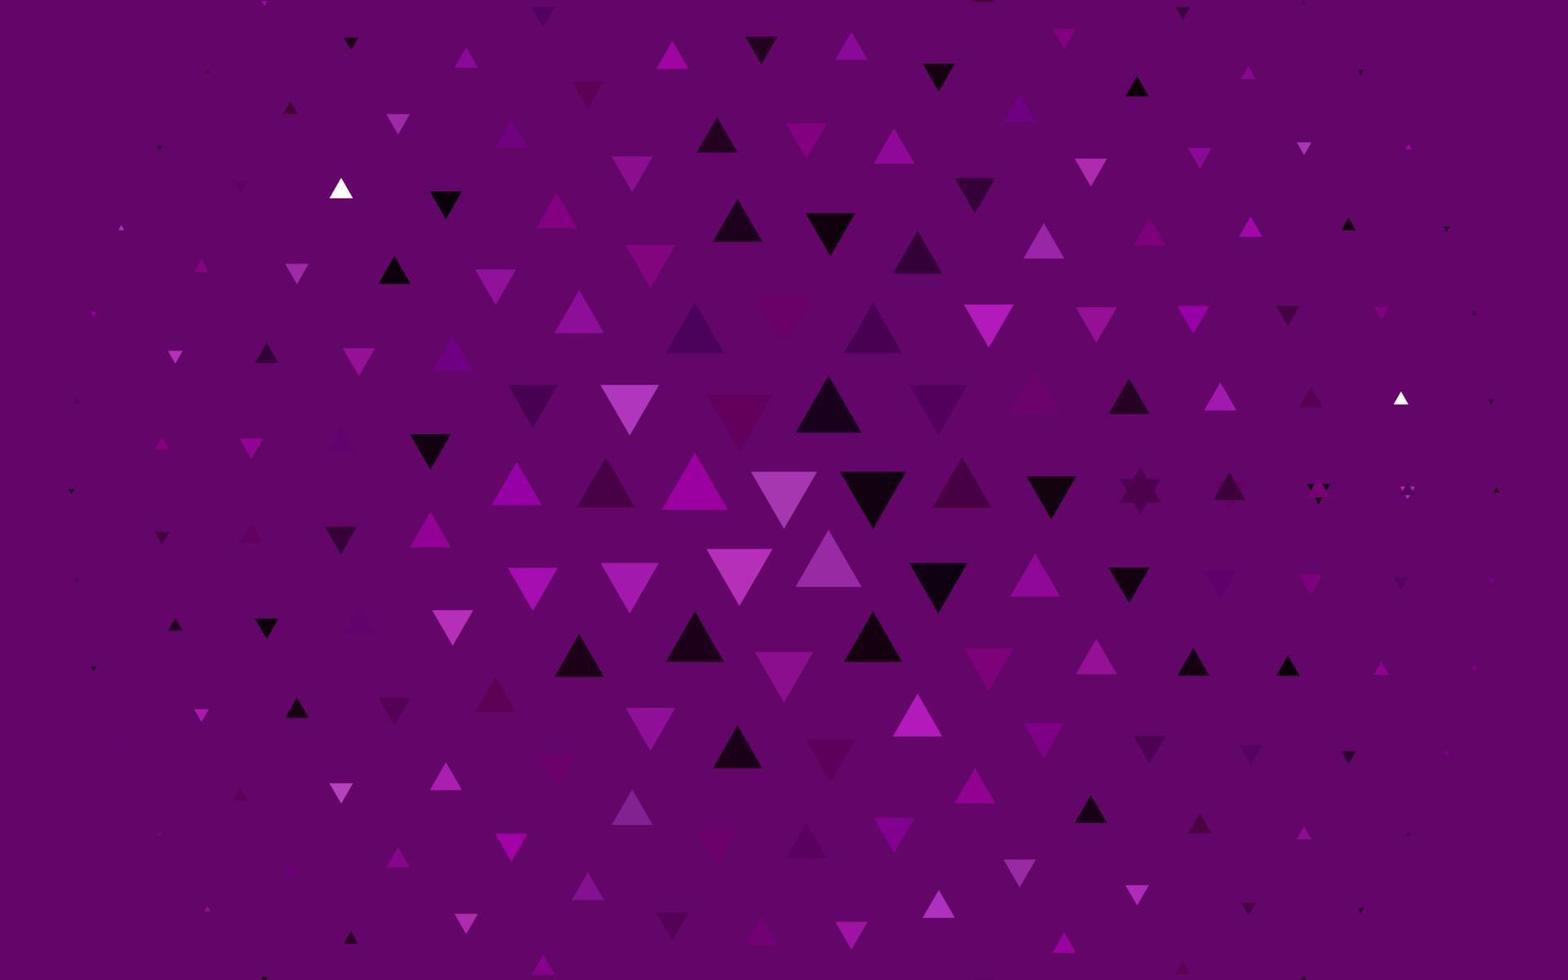 copertina vettoriale viola chiaro in stile poligonale.